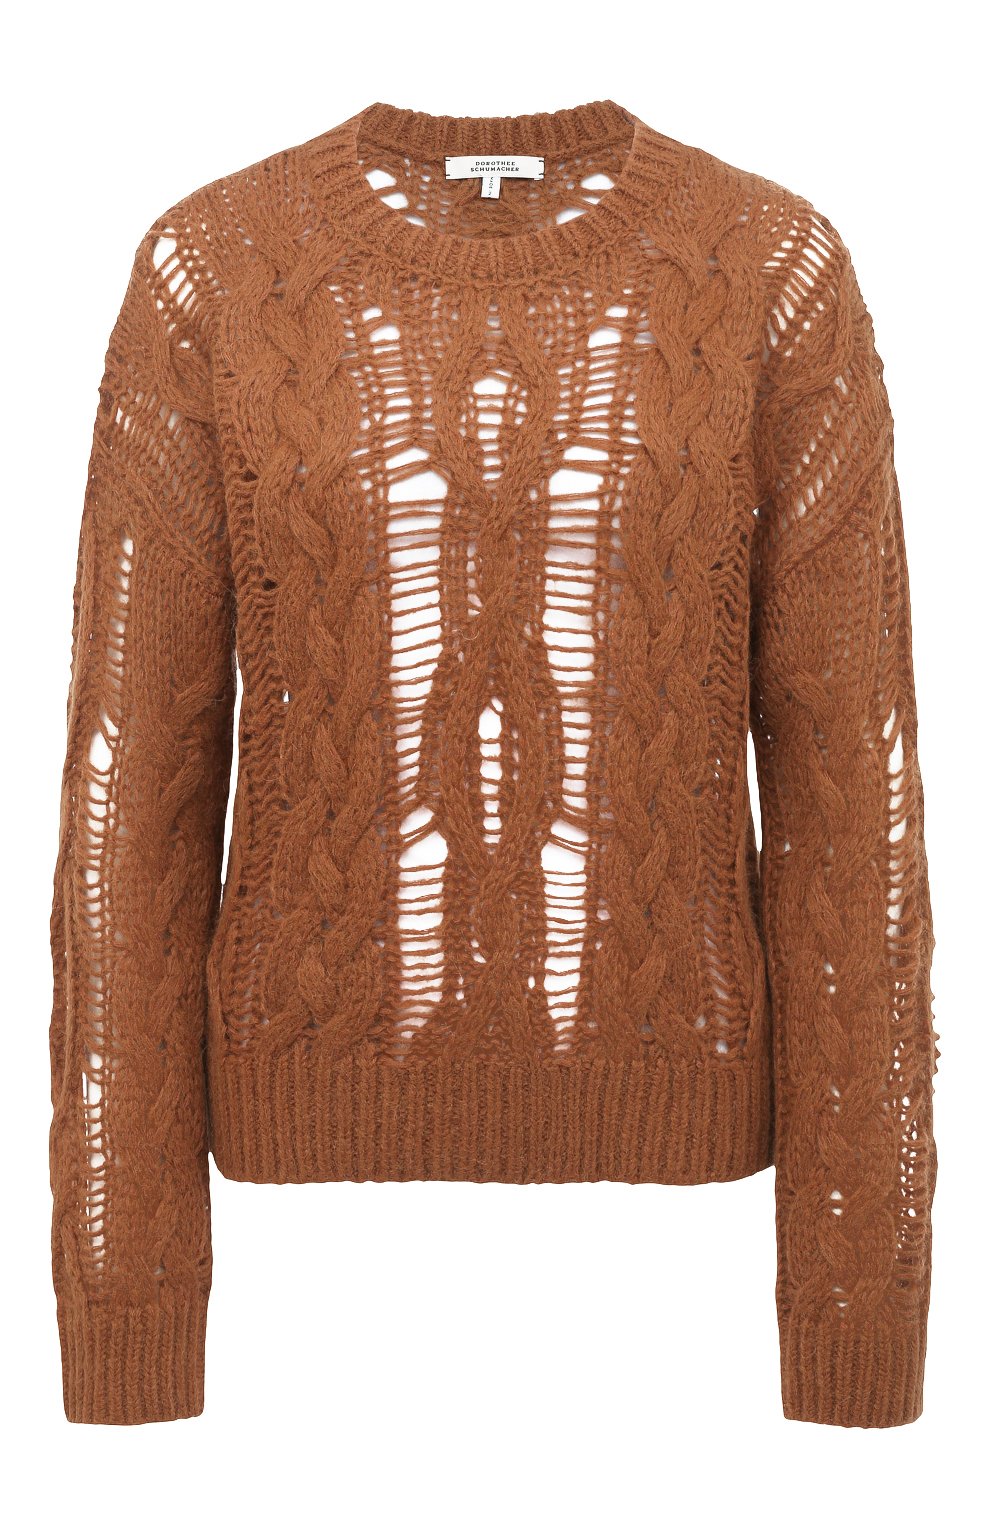 Шерстяной свитер Dorothee Schumacher коричневого цвета